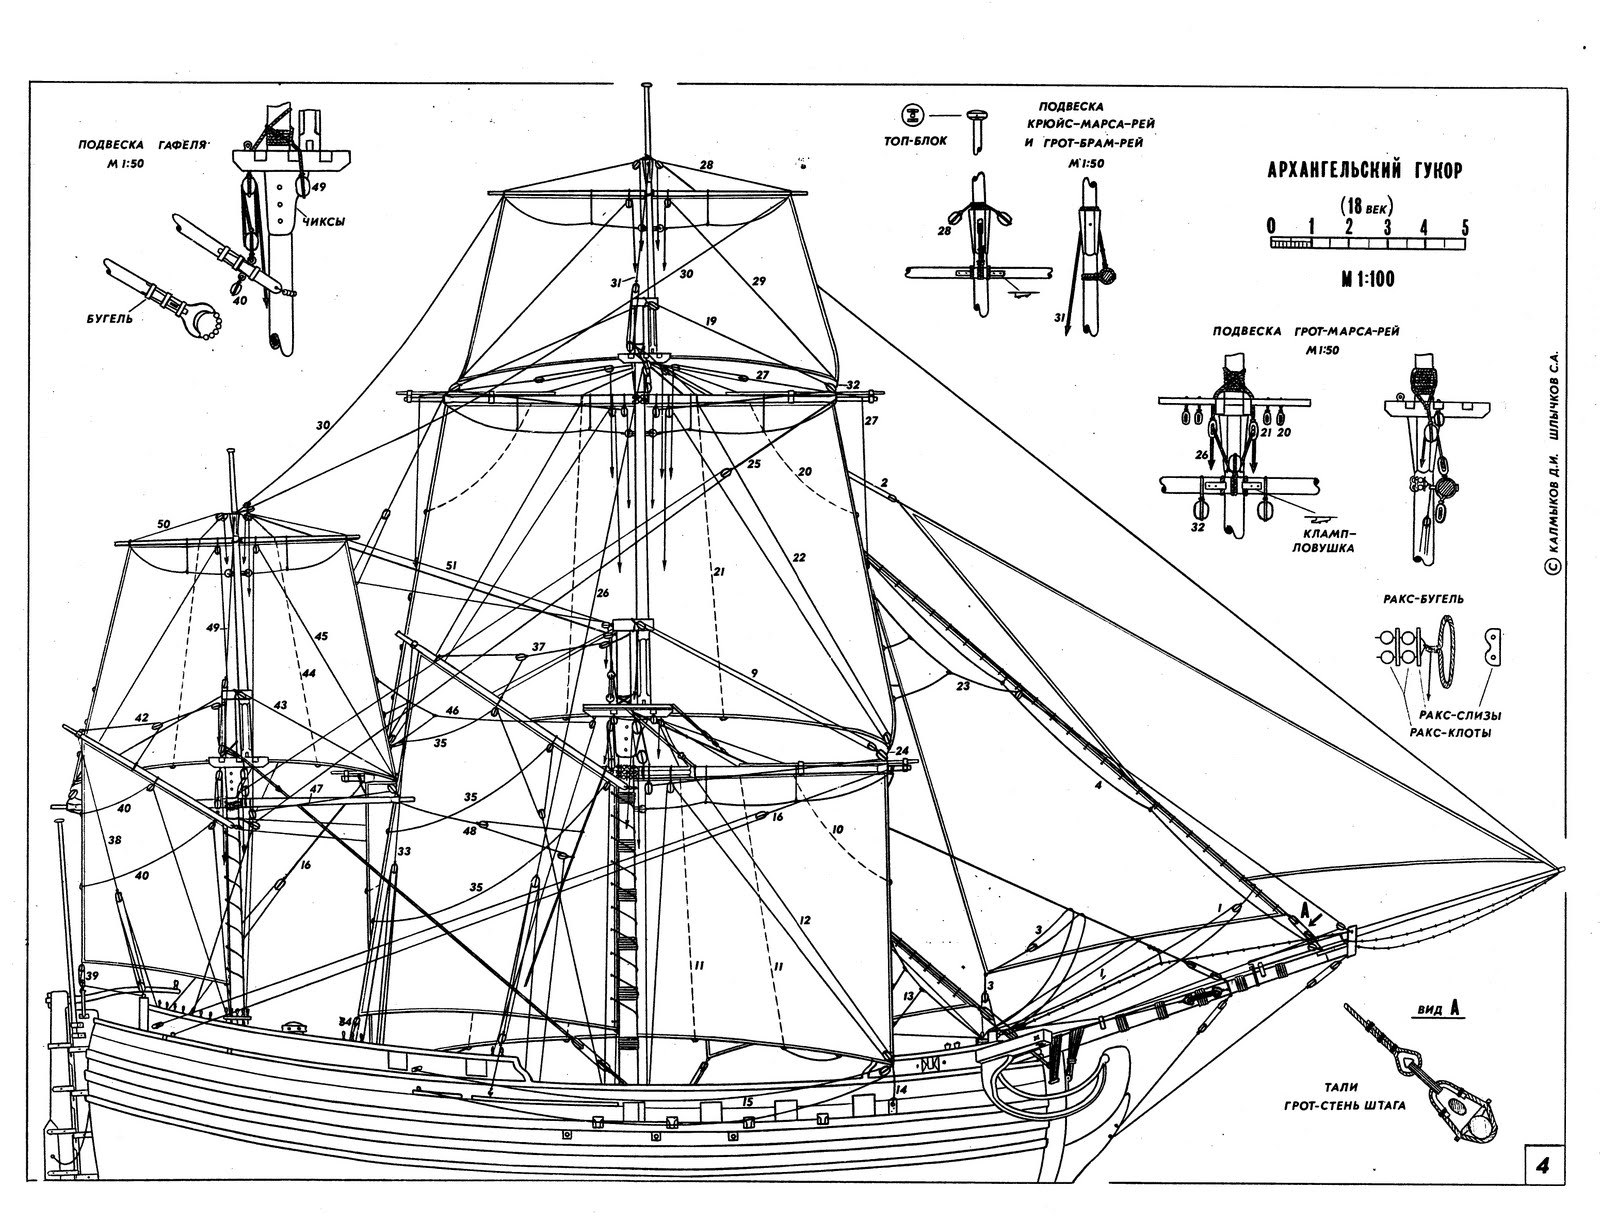 free model boat plans wooden pdf woodworking